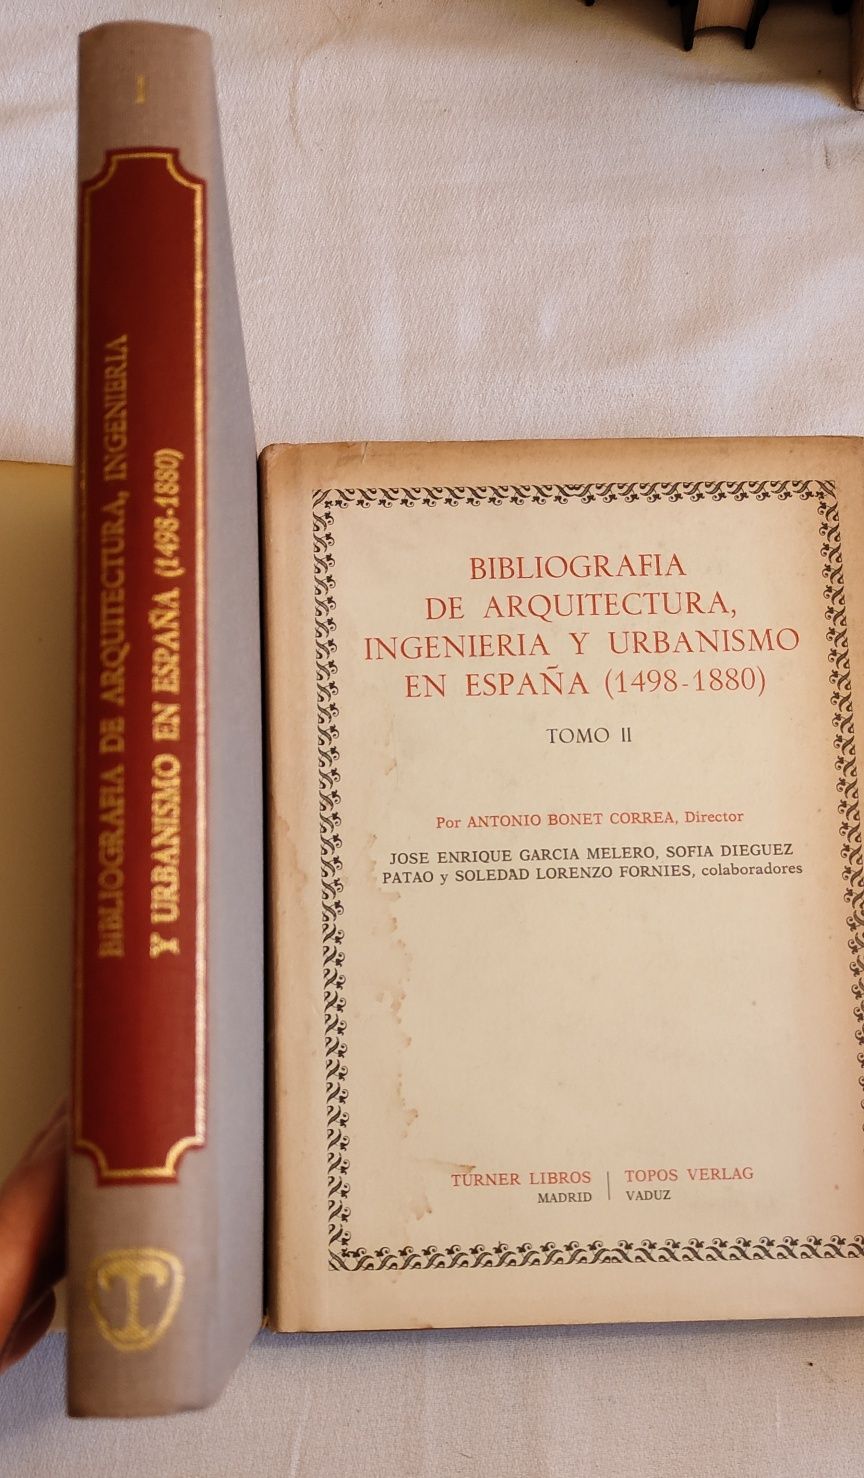 Bibliografia de Arquitetura, Ingenieria y Urbanismo en Espana